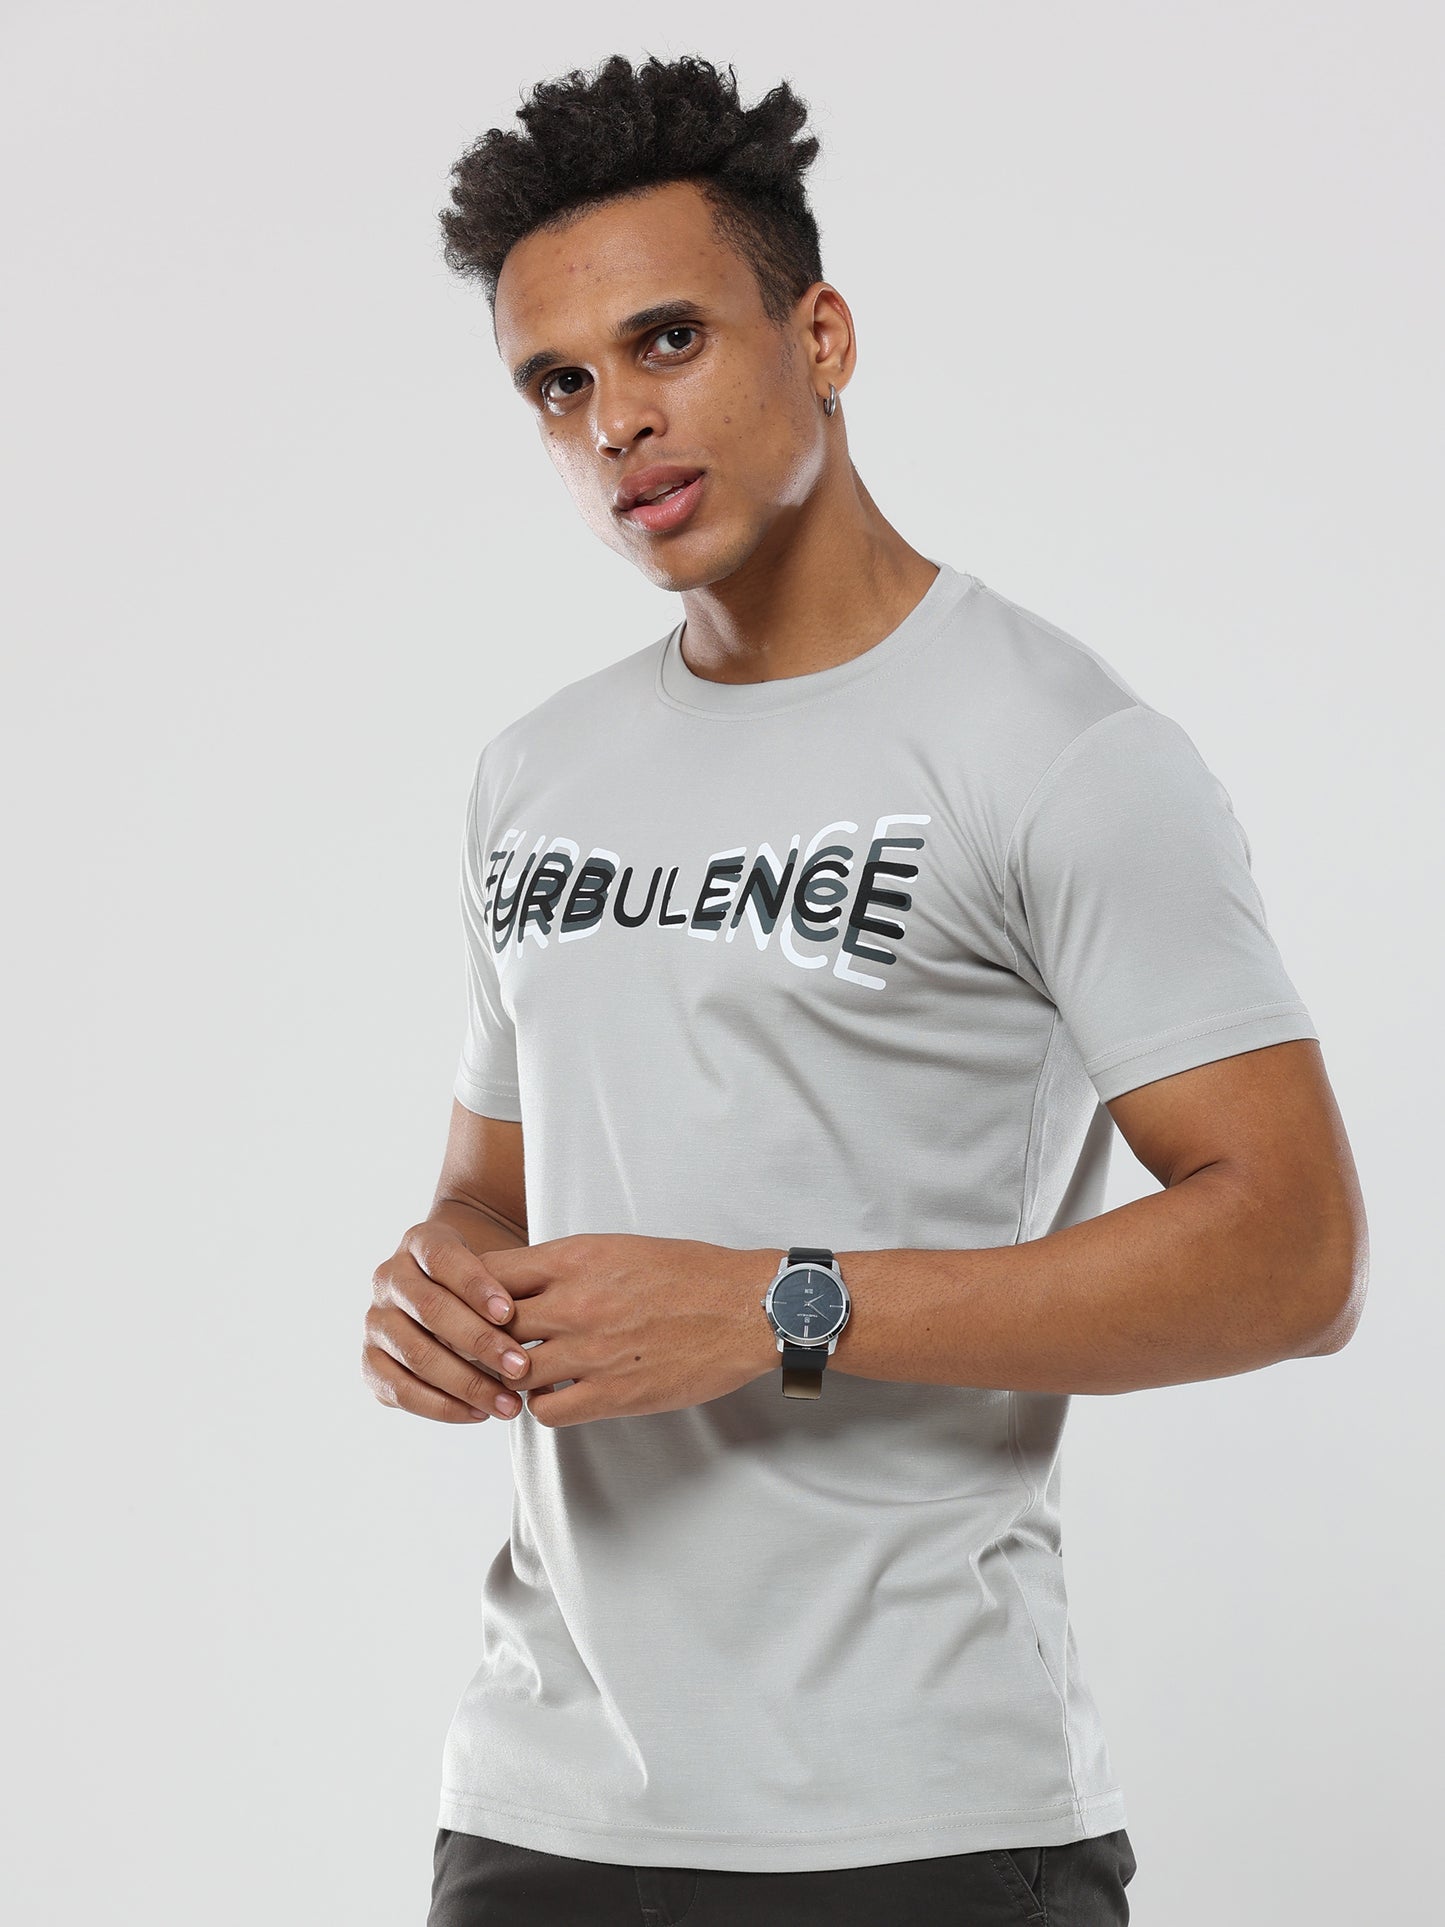 Classic Italian light gray Turbulence printed T-shirt for men